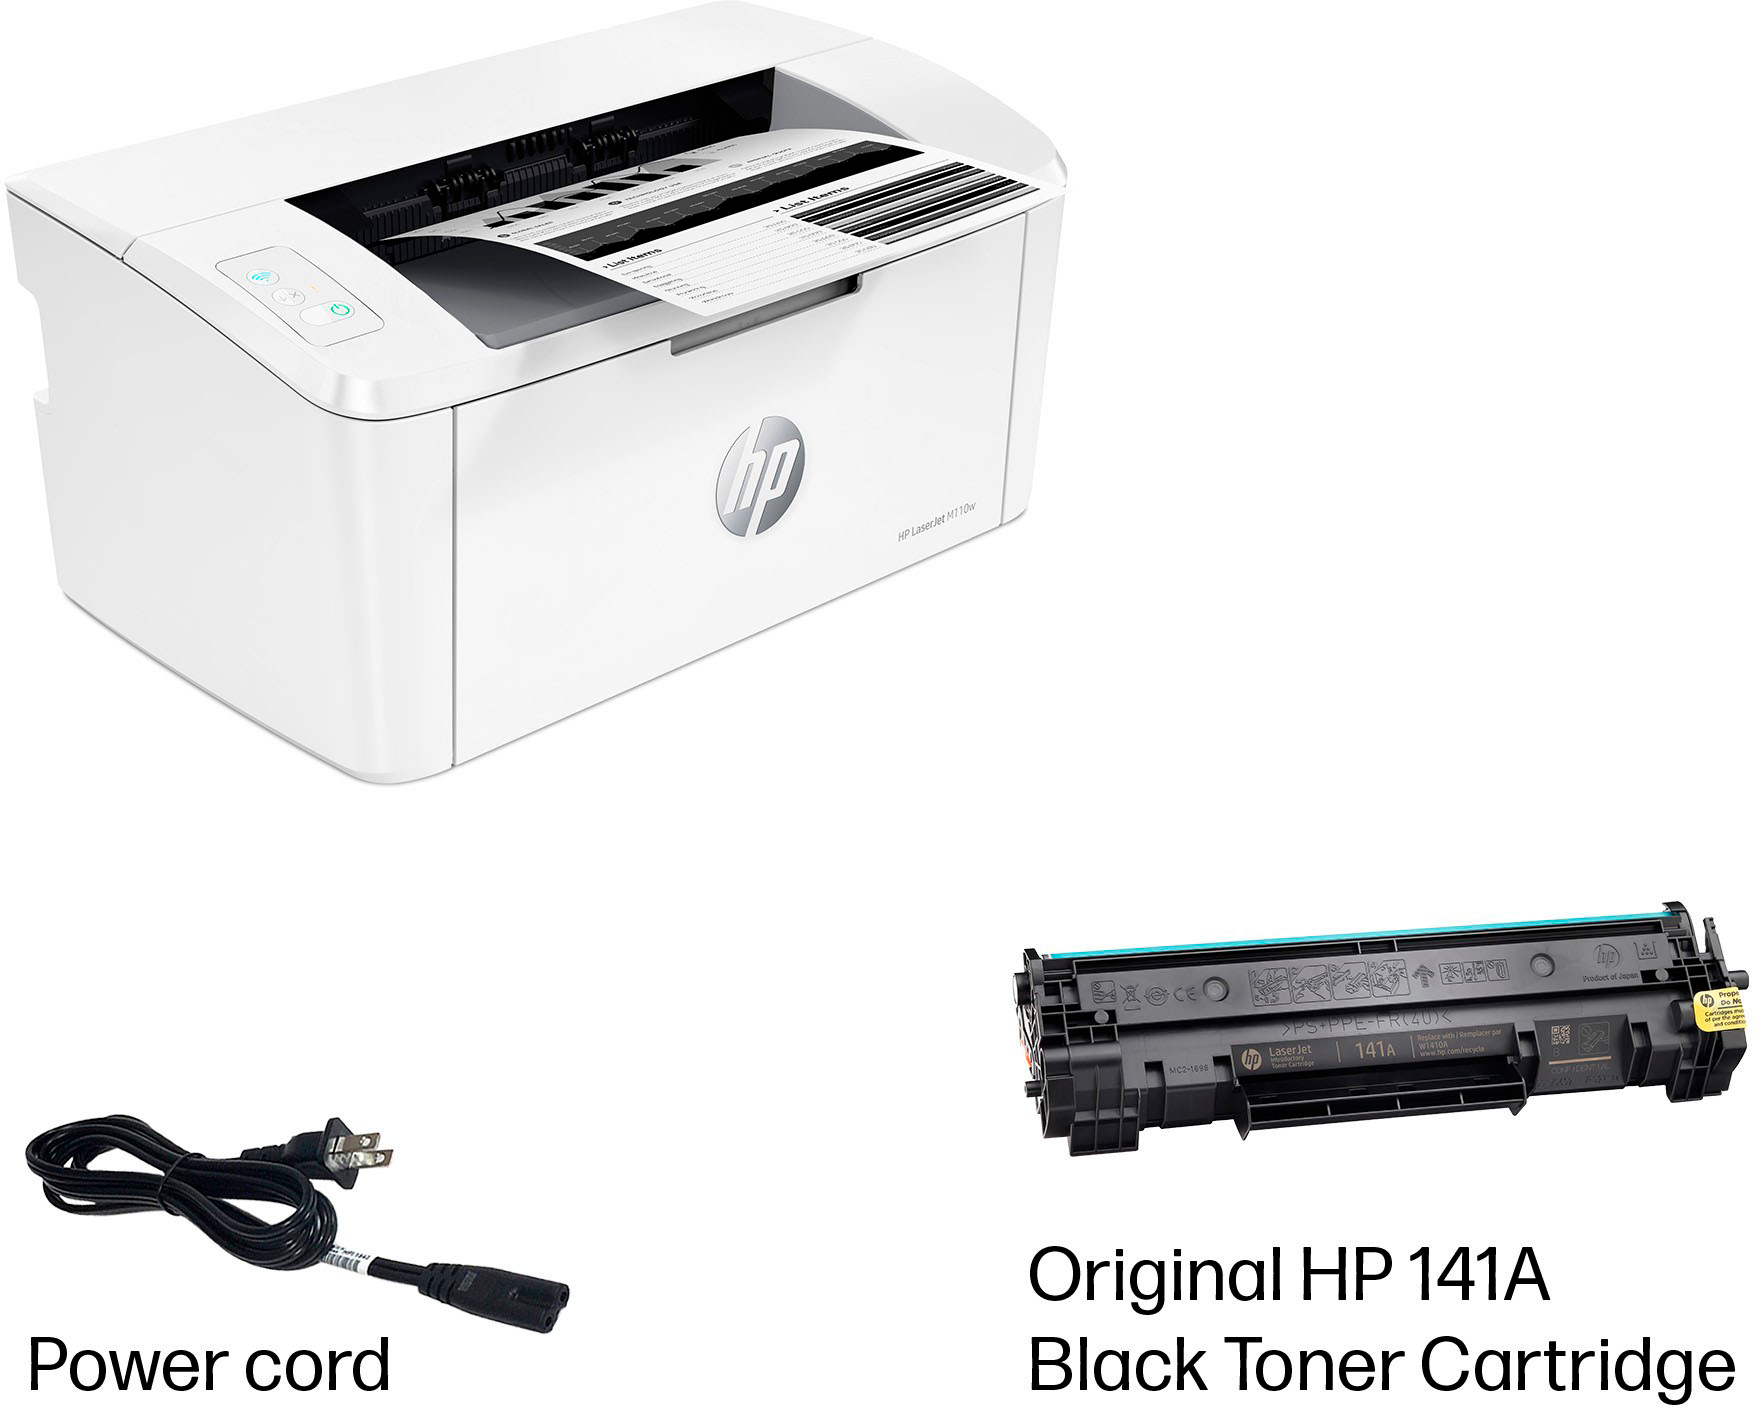 HP LaserJet M110w Wireless Printer M110w Laser White Black and White Buy LaserJet - Best